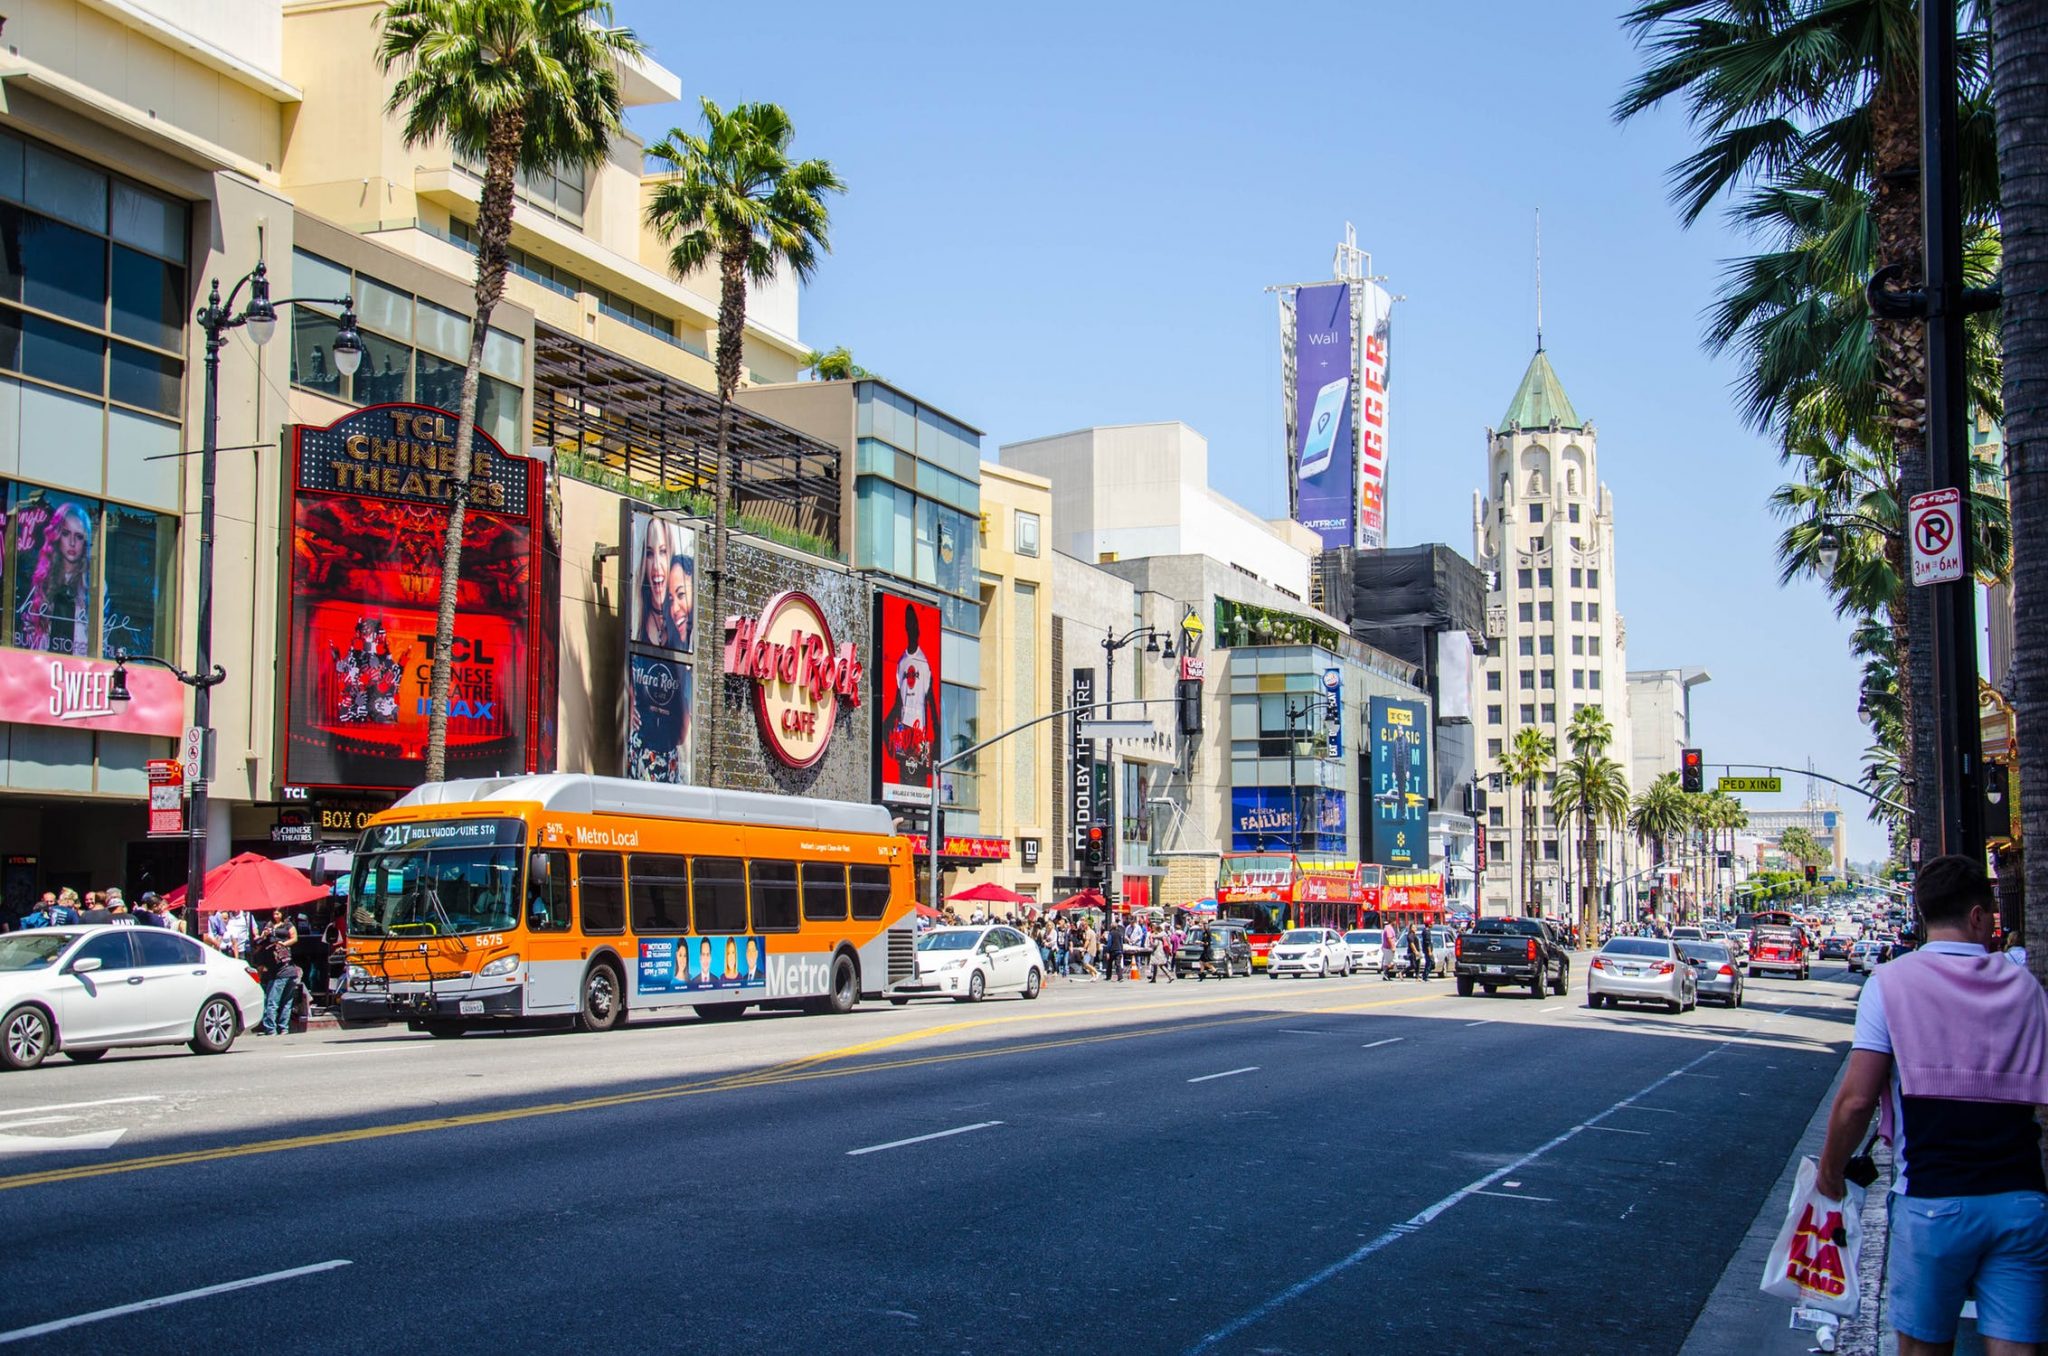 How to Get Around Los Angeles - Public Transit